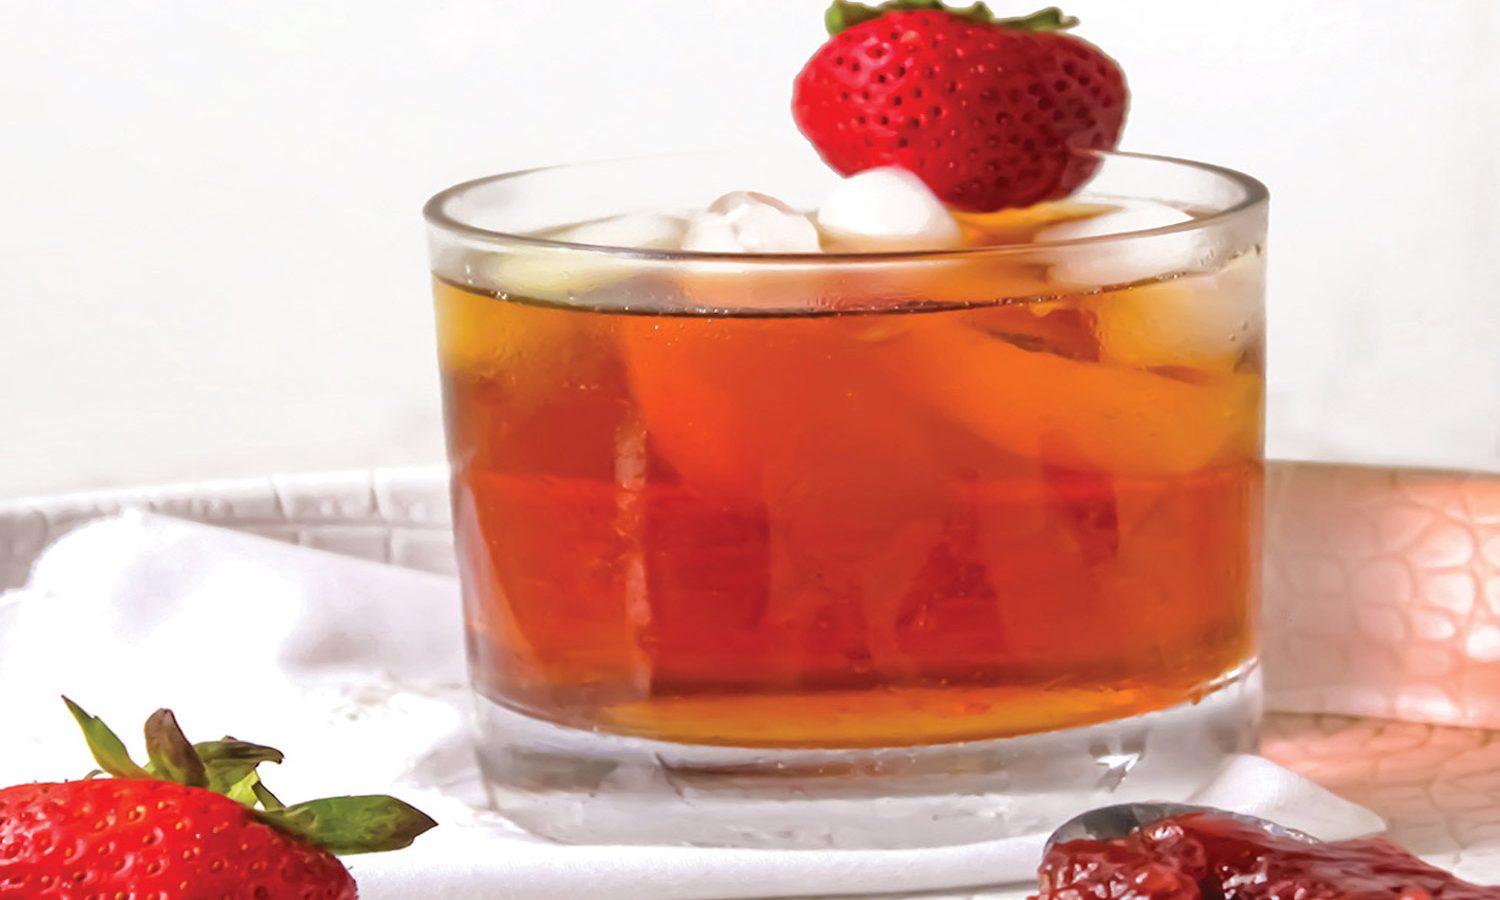 Strawberry jam cocktail